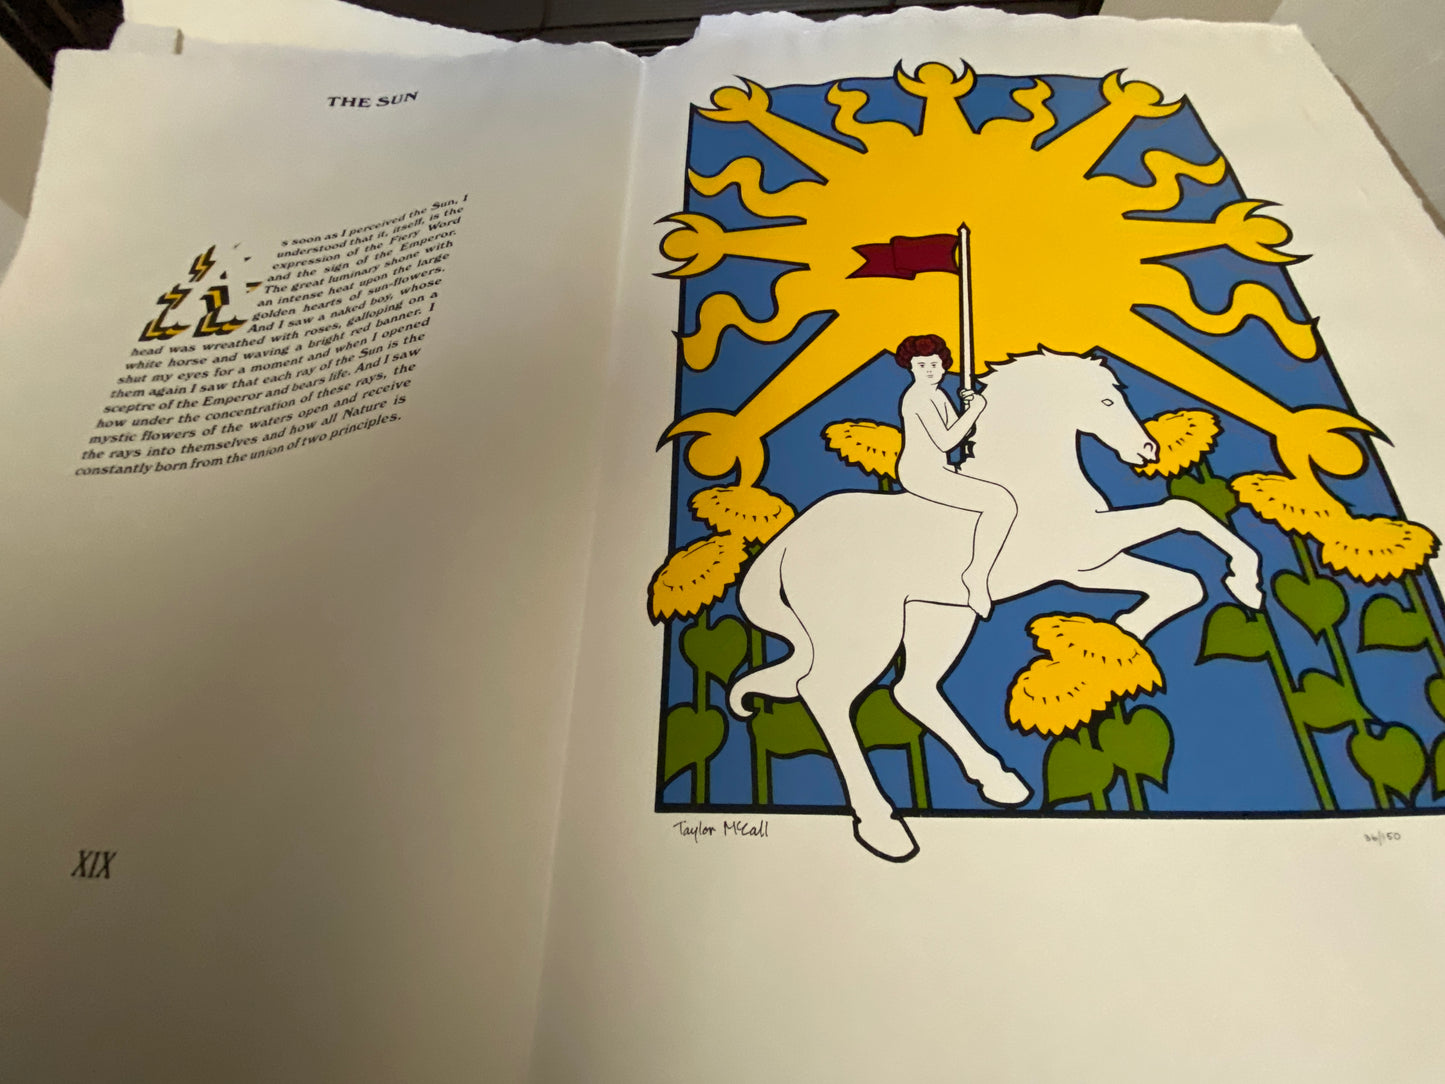 Tarot Folio by Taylor McCall, 1975. Large silk-screen prints.